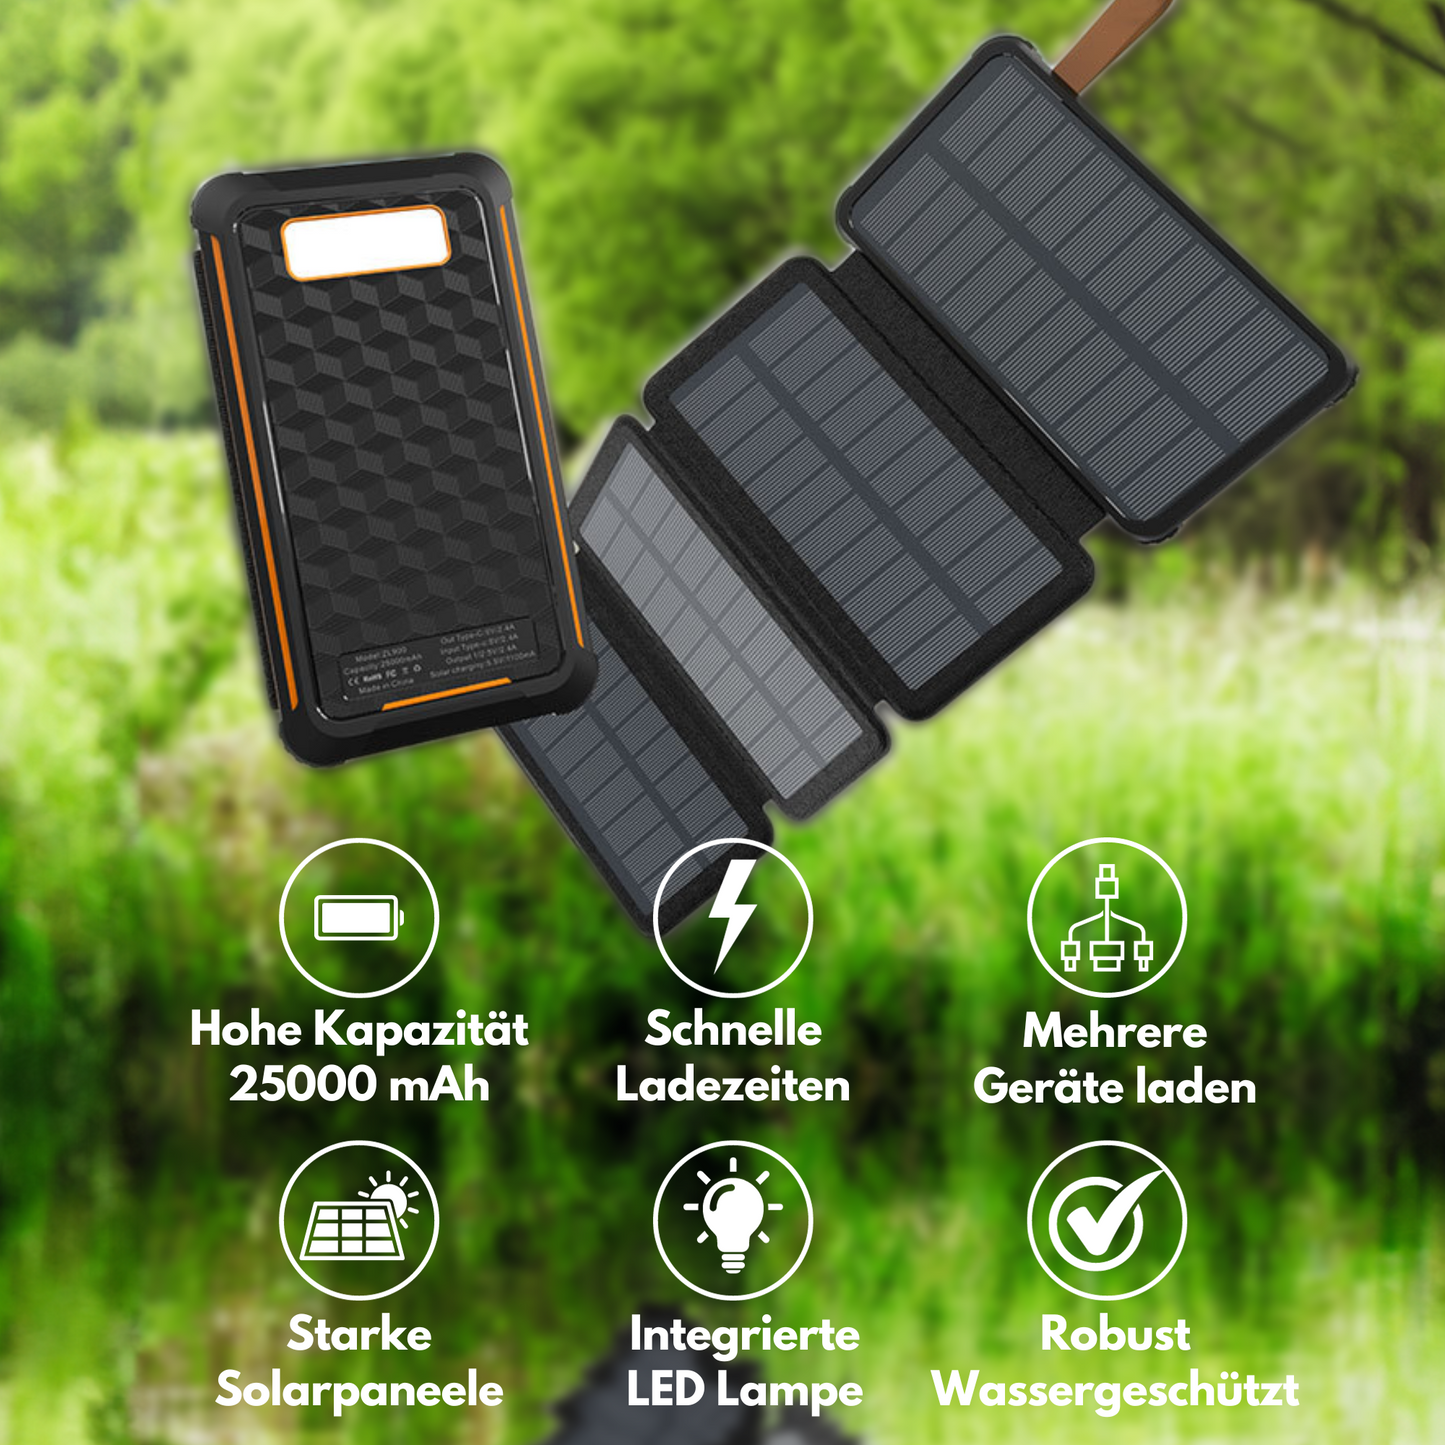 Solar Powerbank v2.0 - testwinnaar met 25000mAh - nieuw model